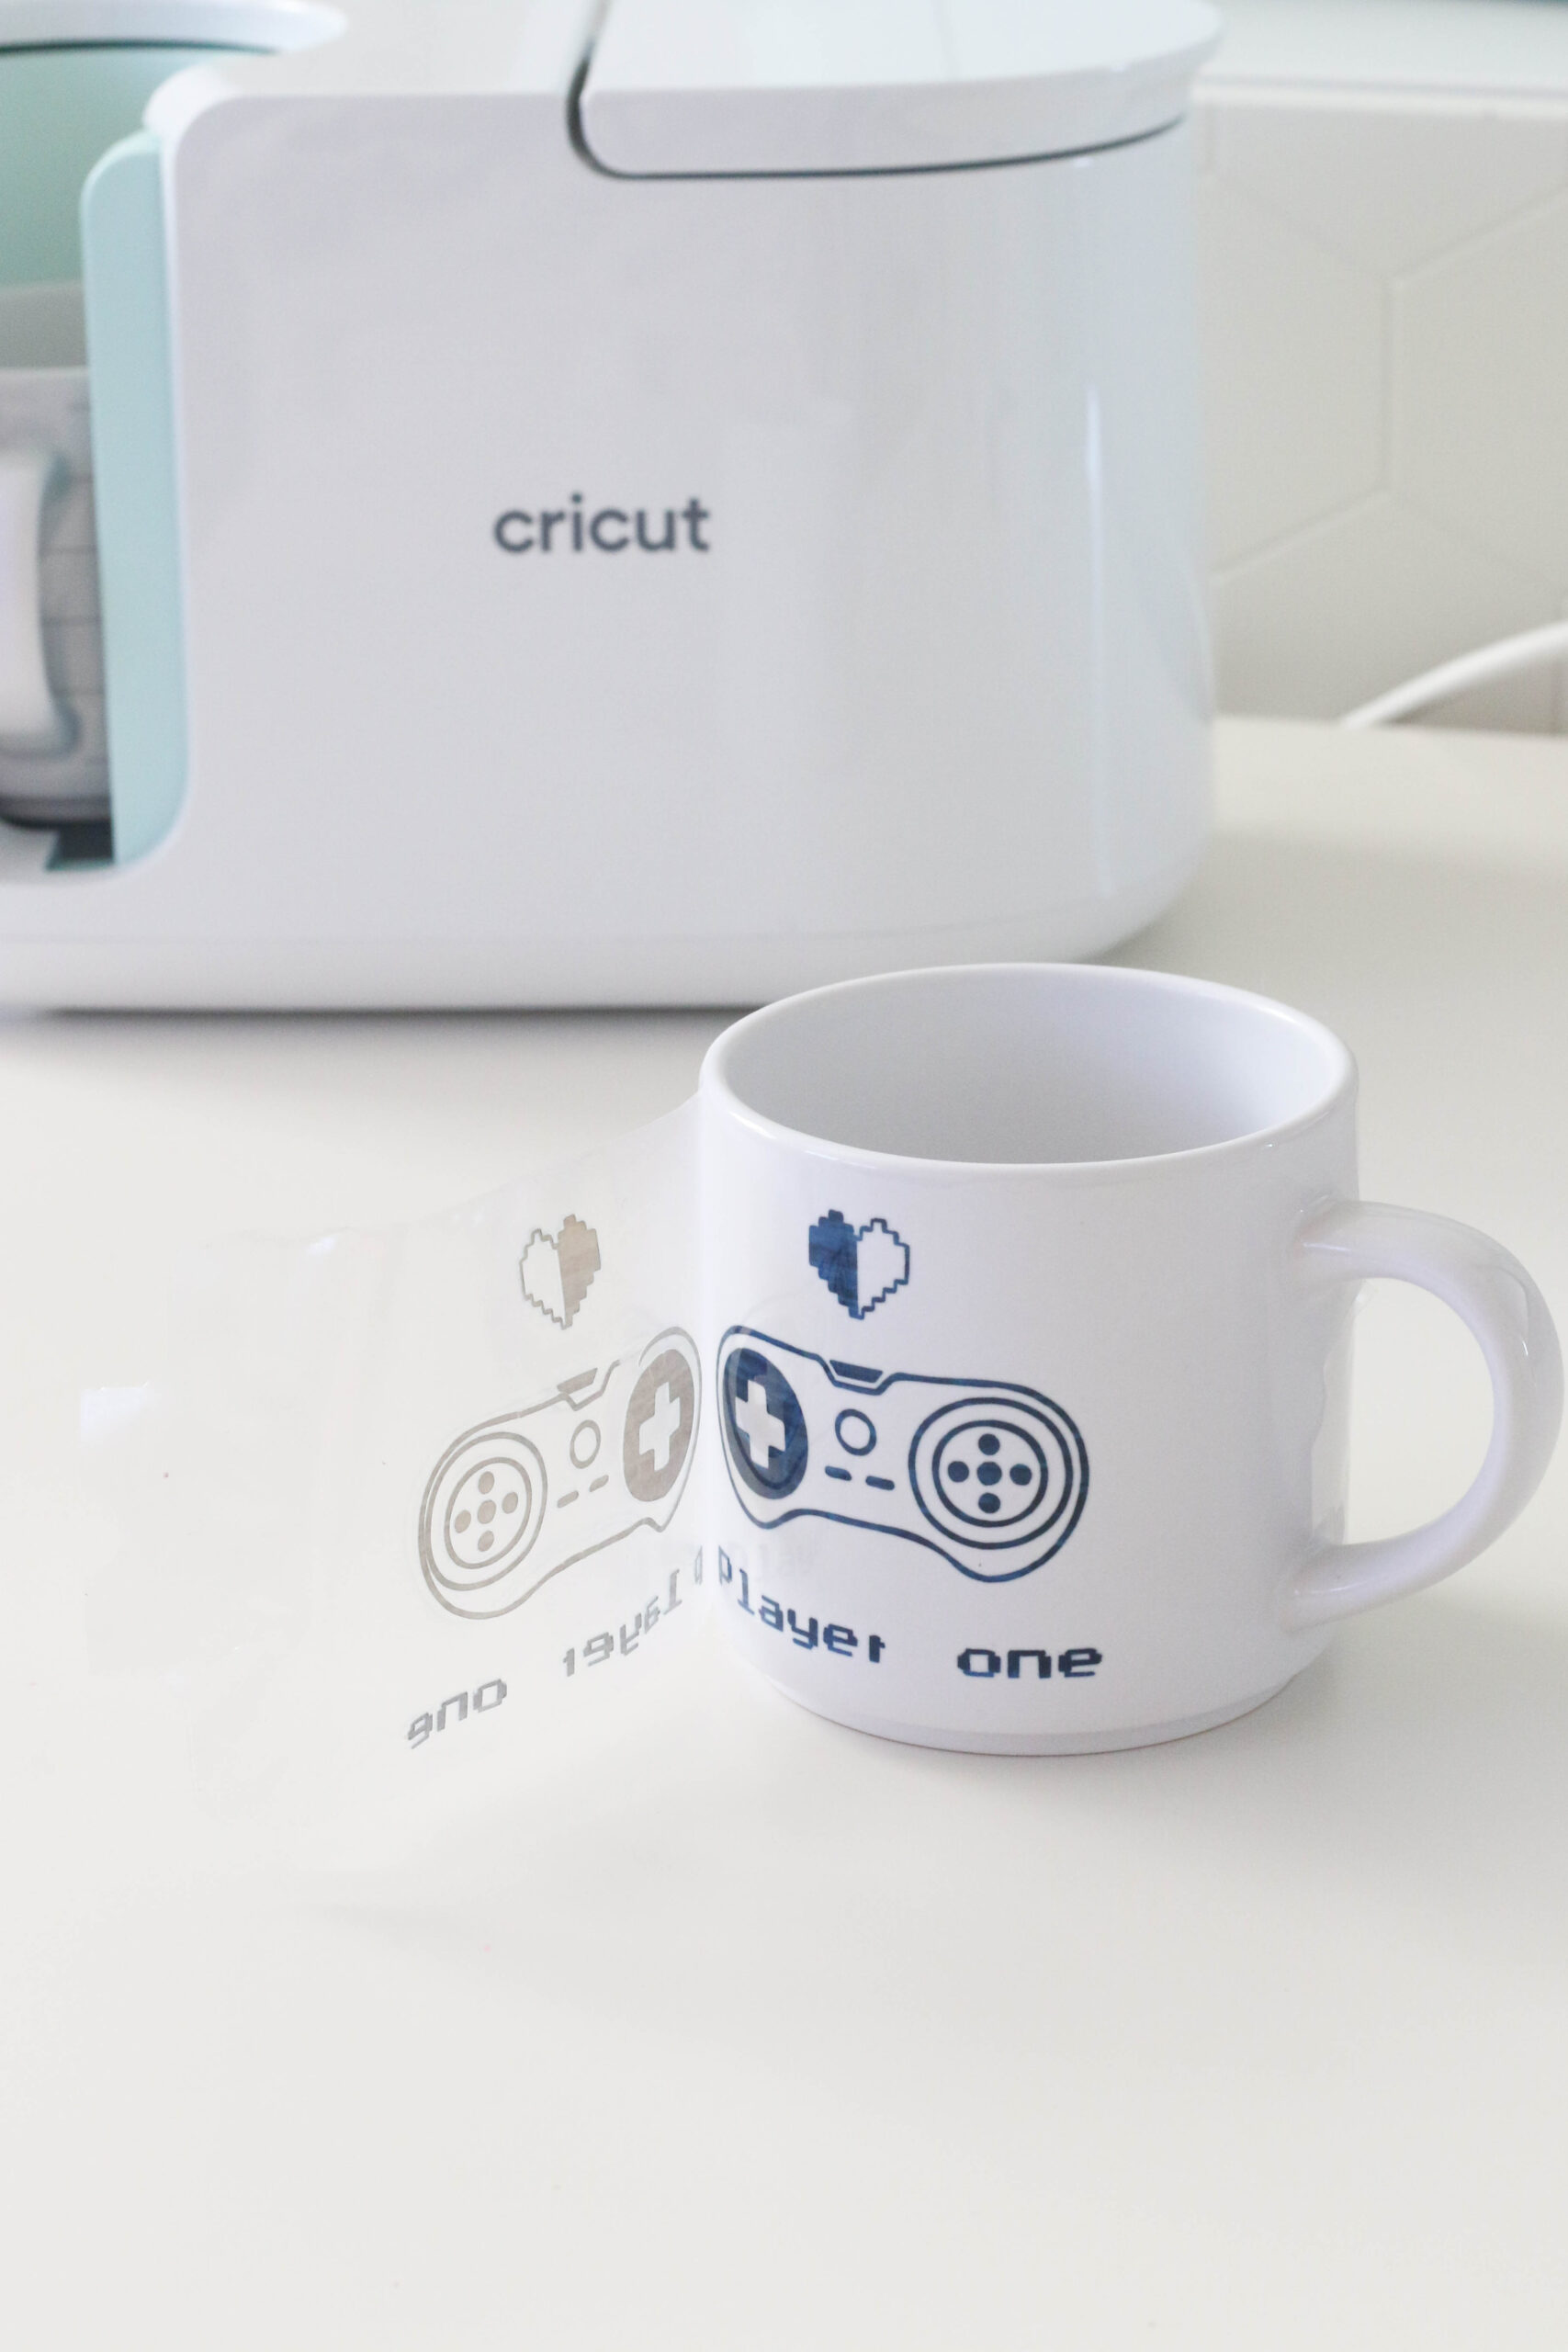 How to Make a Personalized Mug Using the Cricut Mug Press